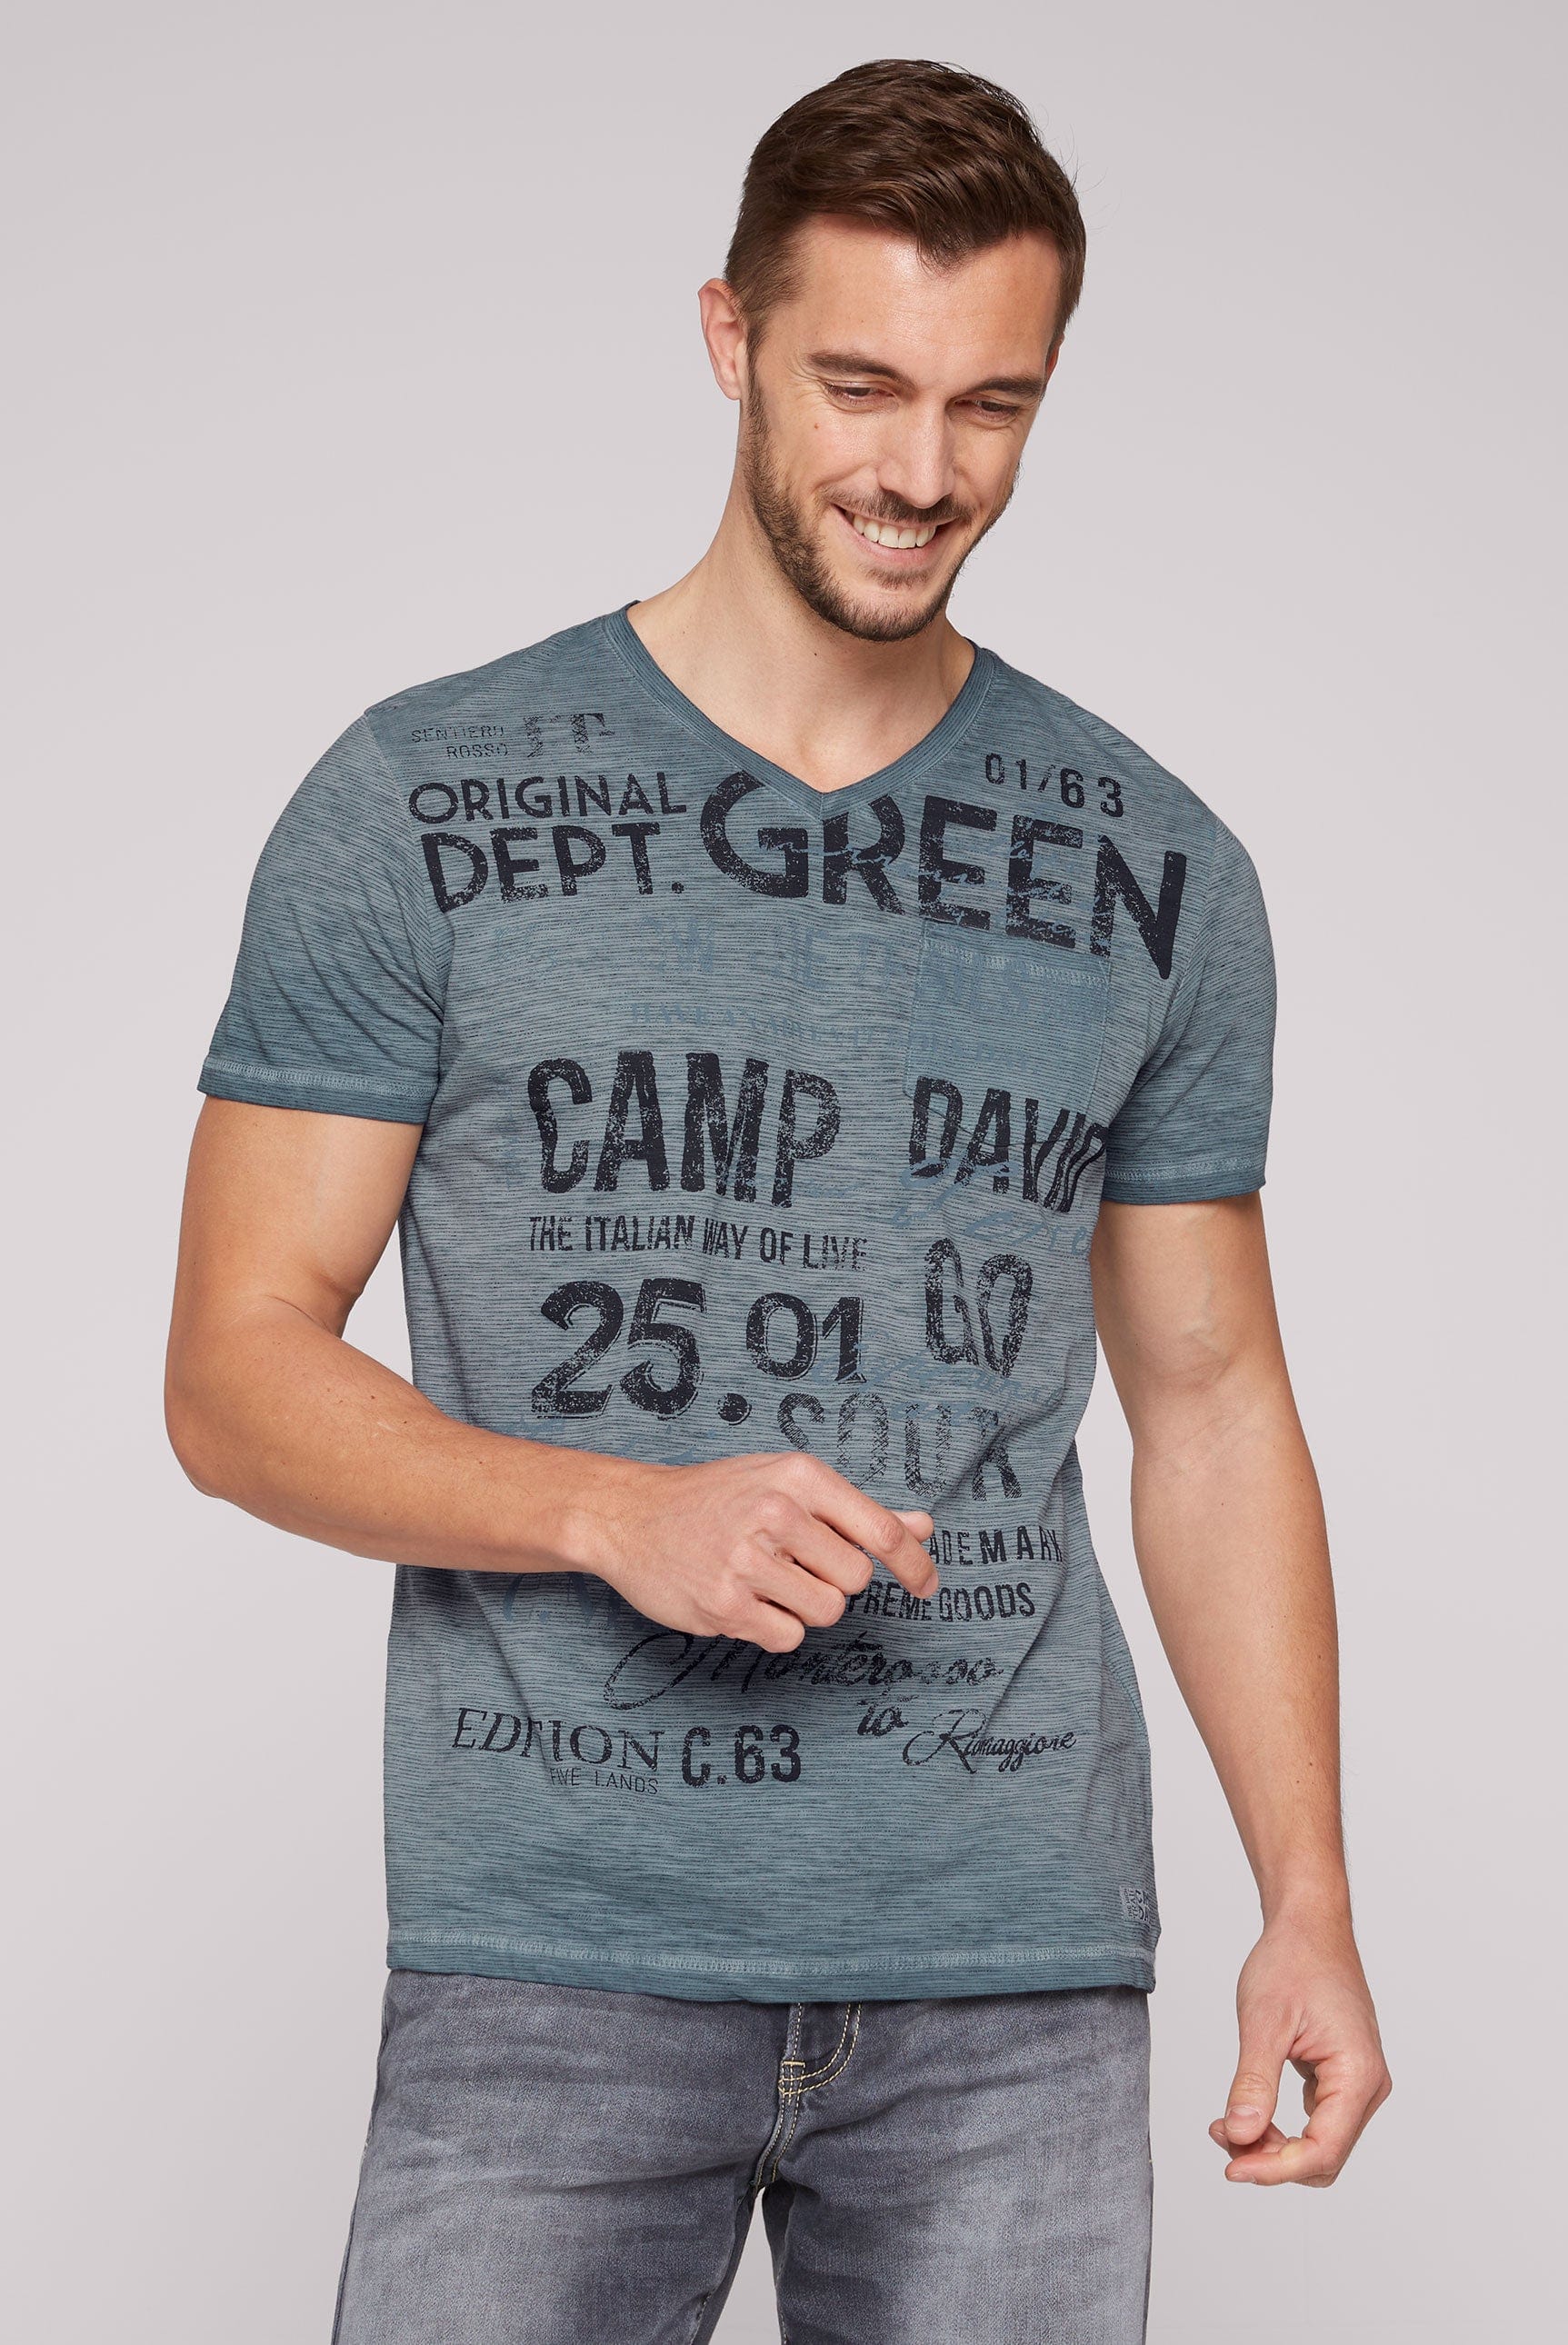 Camp David T-Shirts: Quality and Versatility Fashion Stateshop 